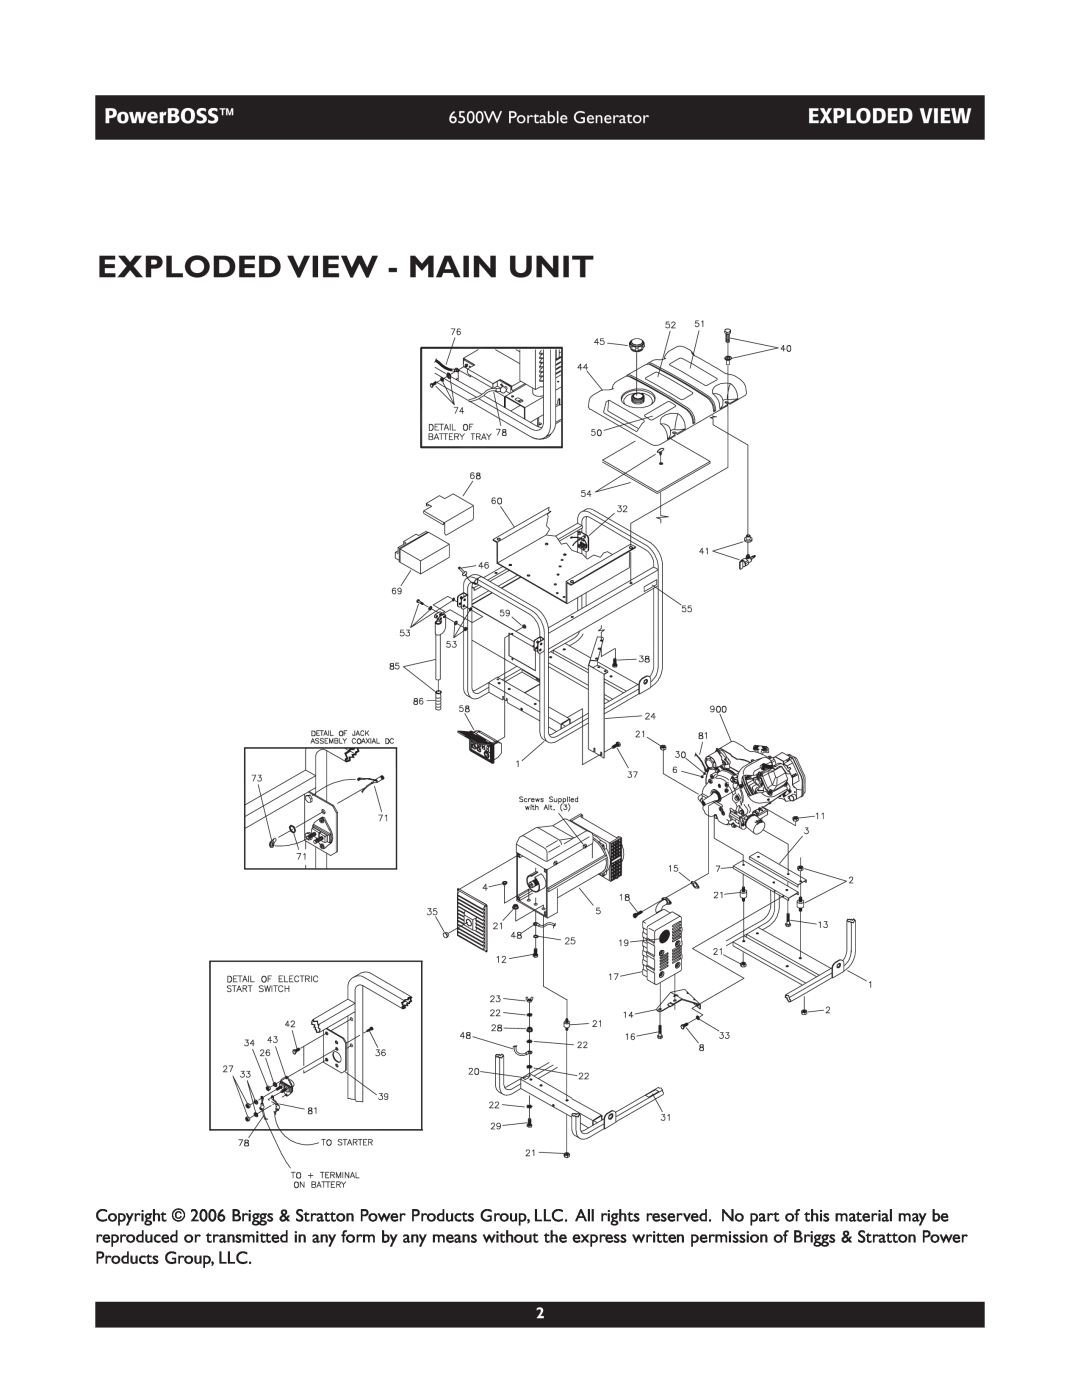 Briggs & Stratton 030227 manual Exploded View - Main Unit, PowerBOSS, 6500W Portable Generator 